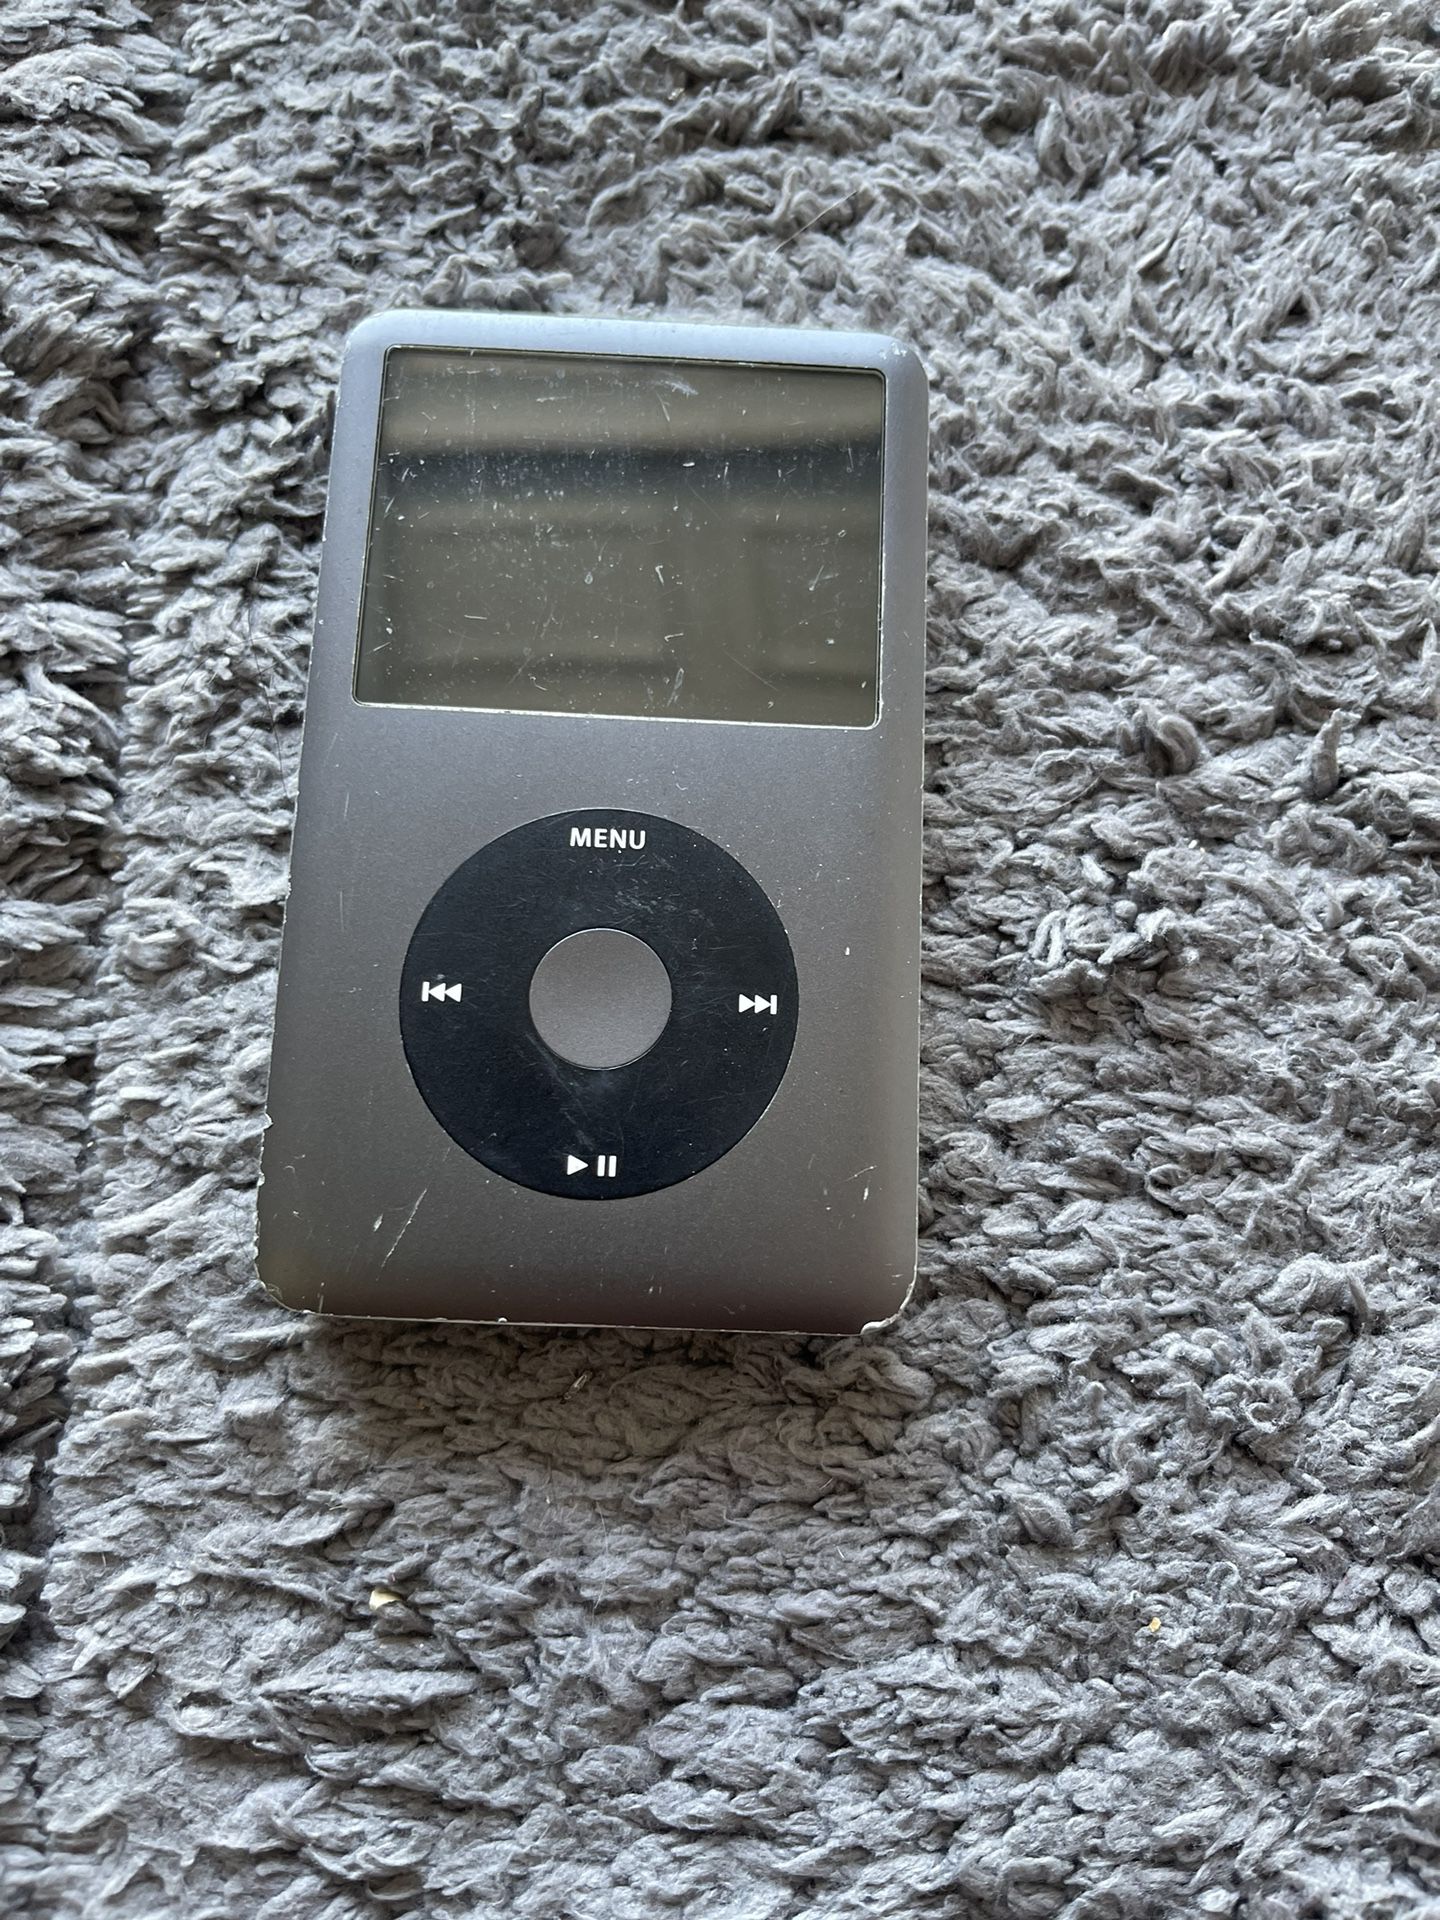 iPod Classic 160GB - Used